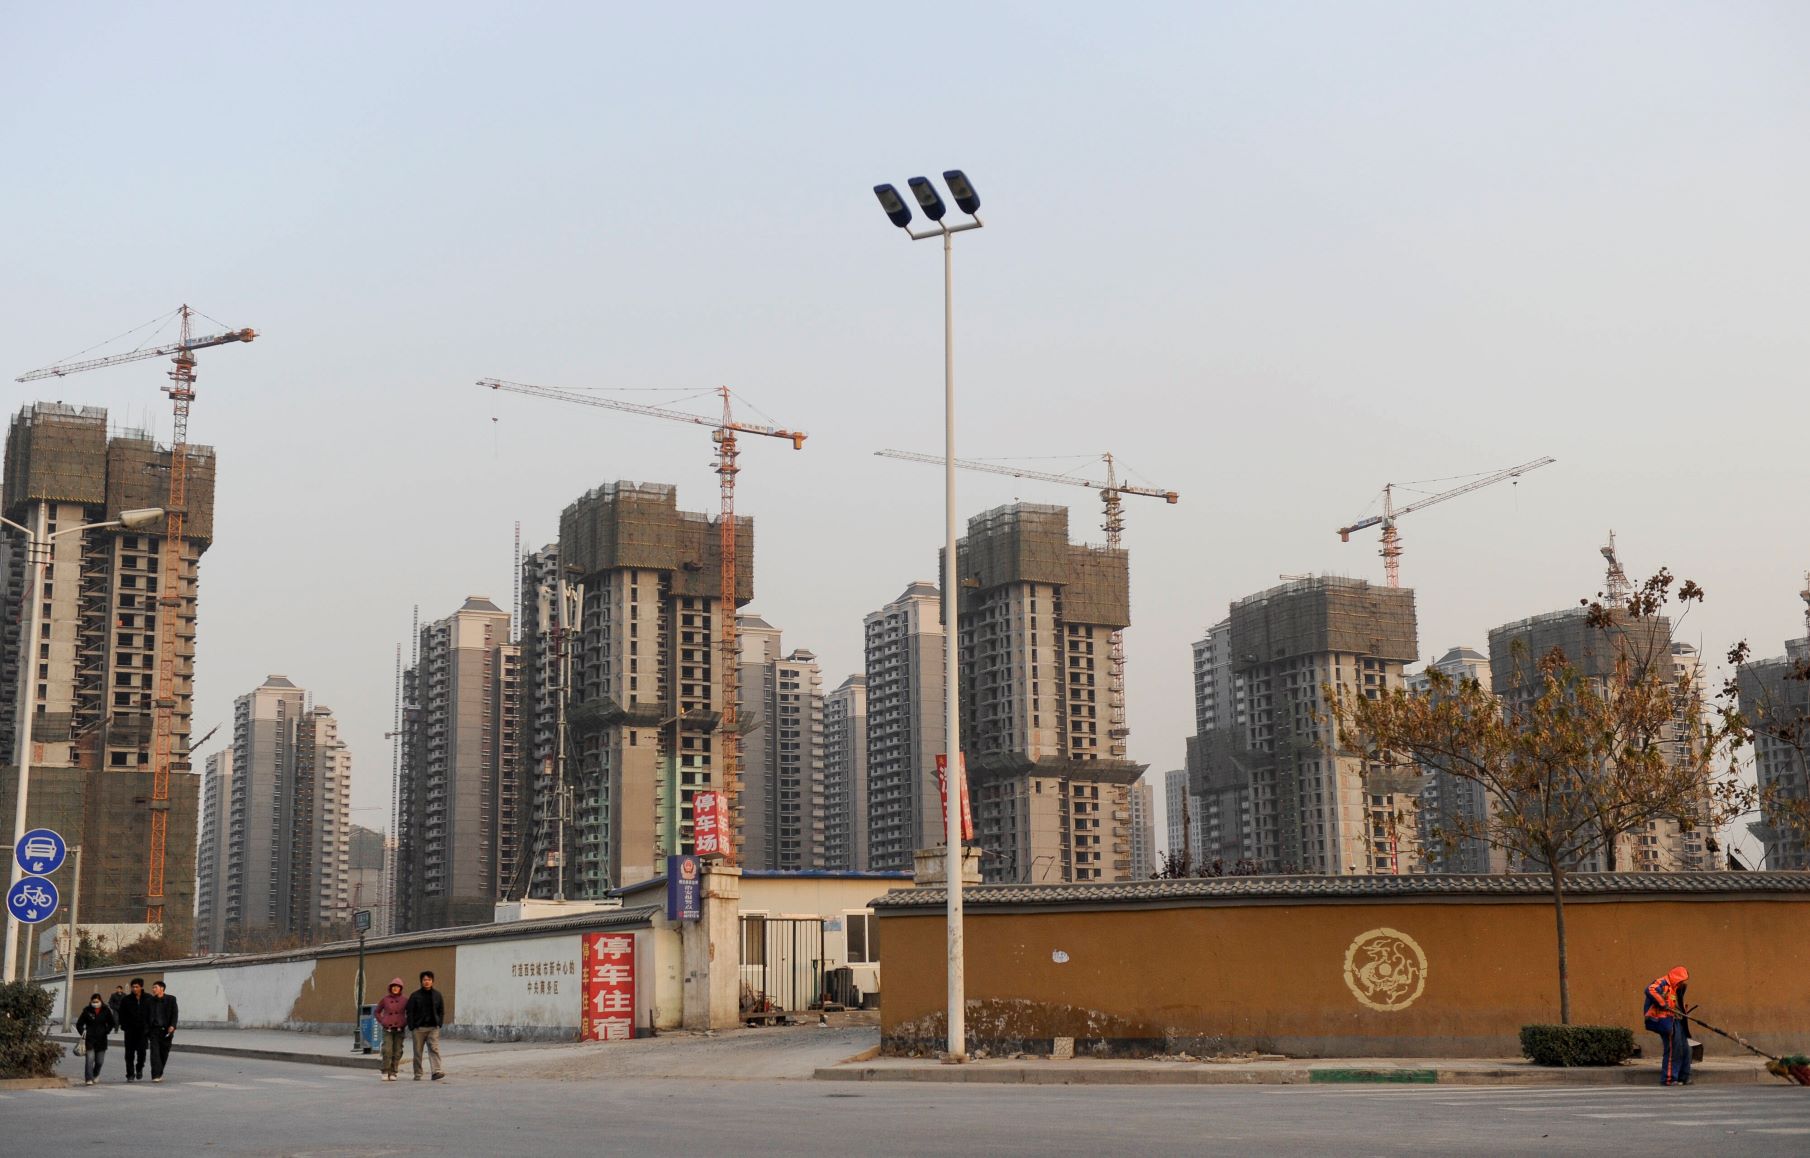 20211006-image-mb-imago imago- Neubau von Wohnhäusern in Xian, China